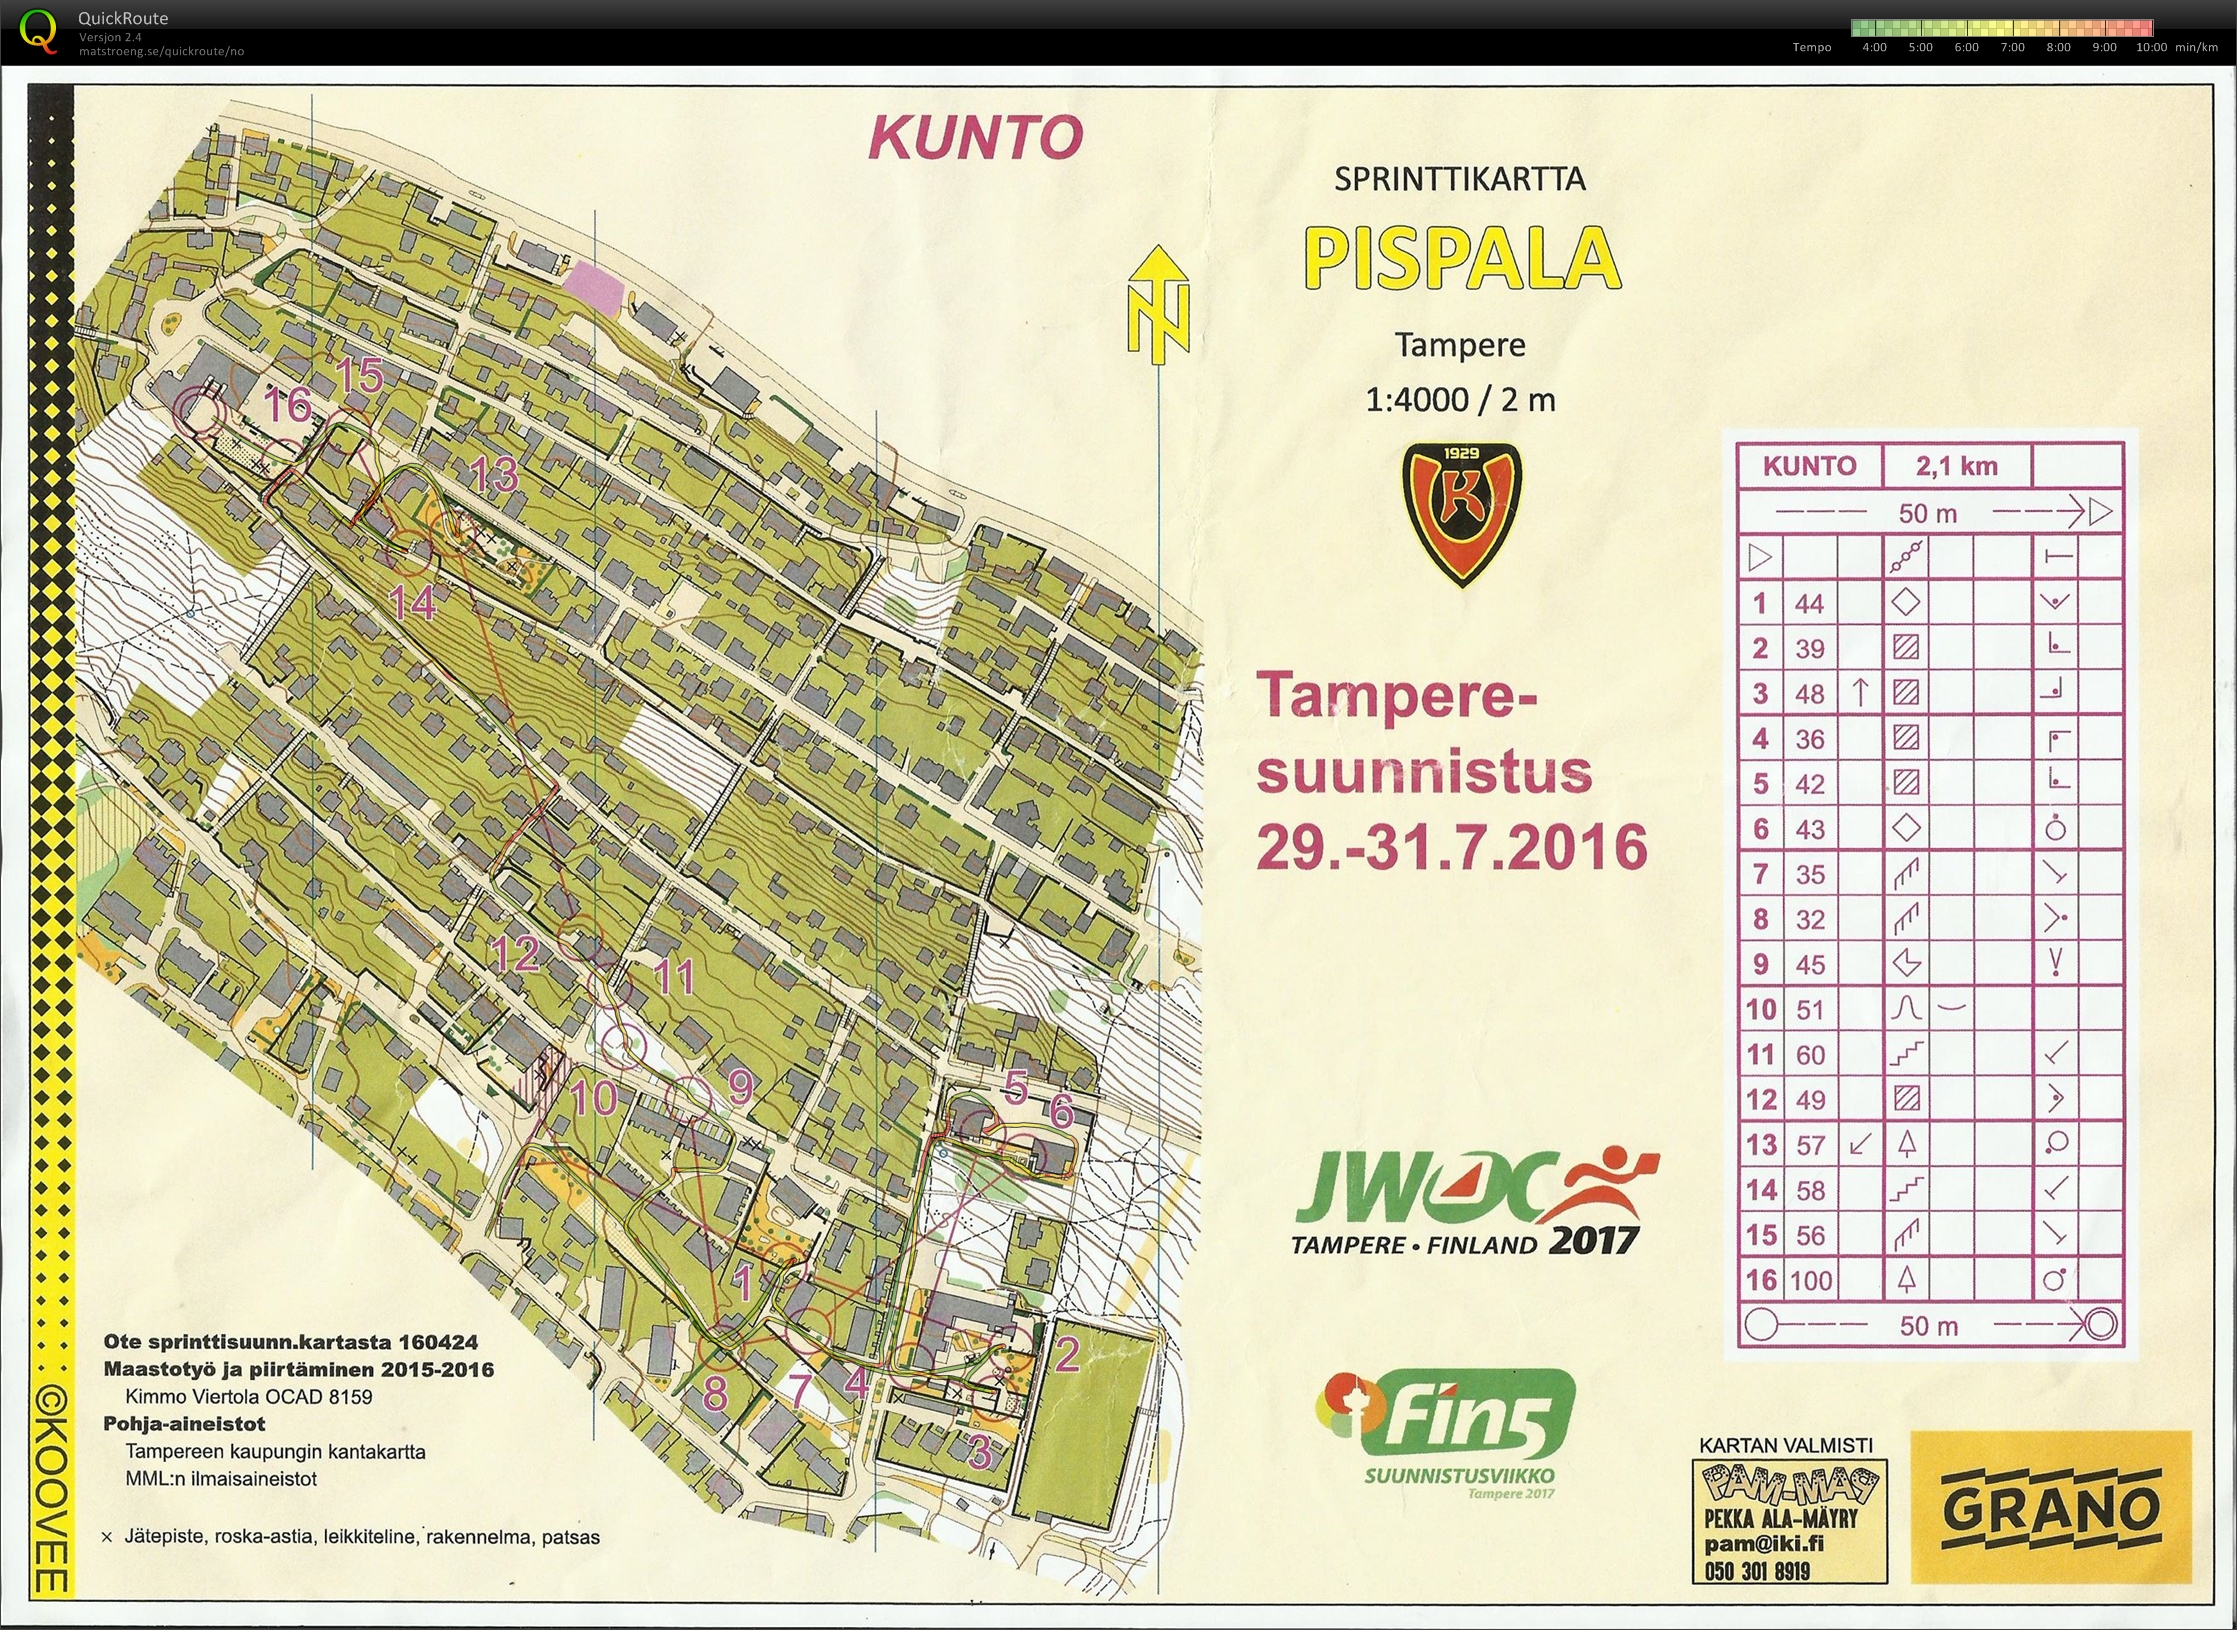 Tampere TC #5 - Jwoc sprint trening (2016-10-28)